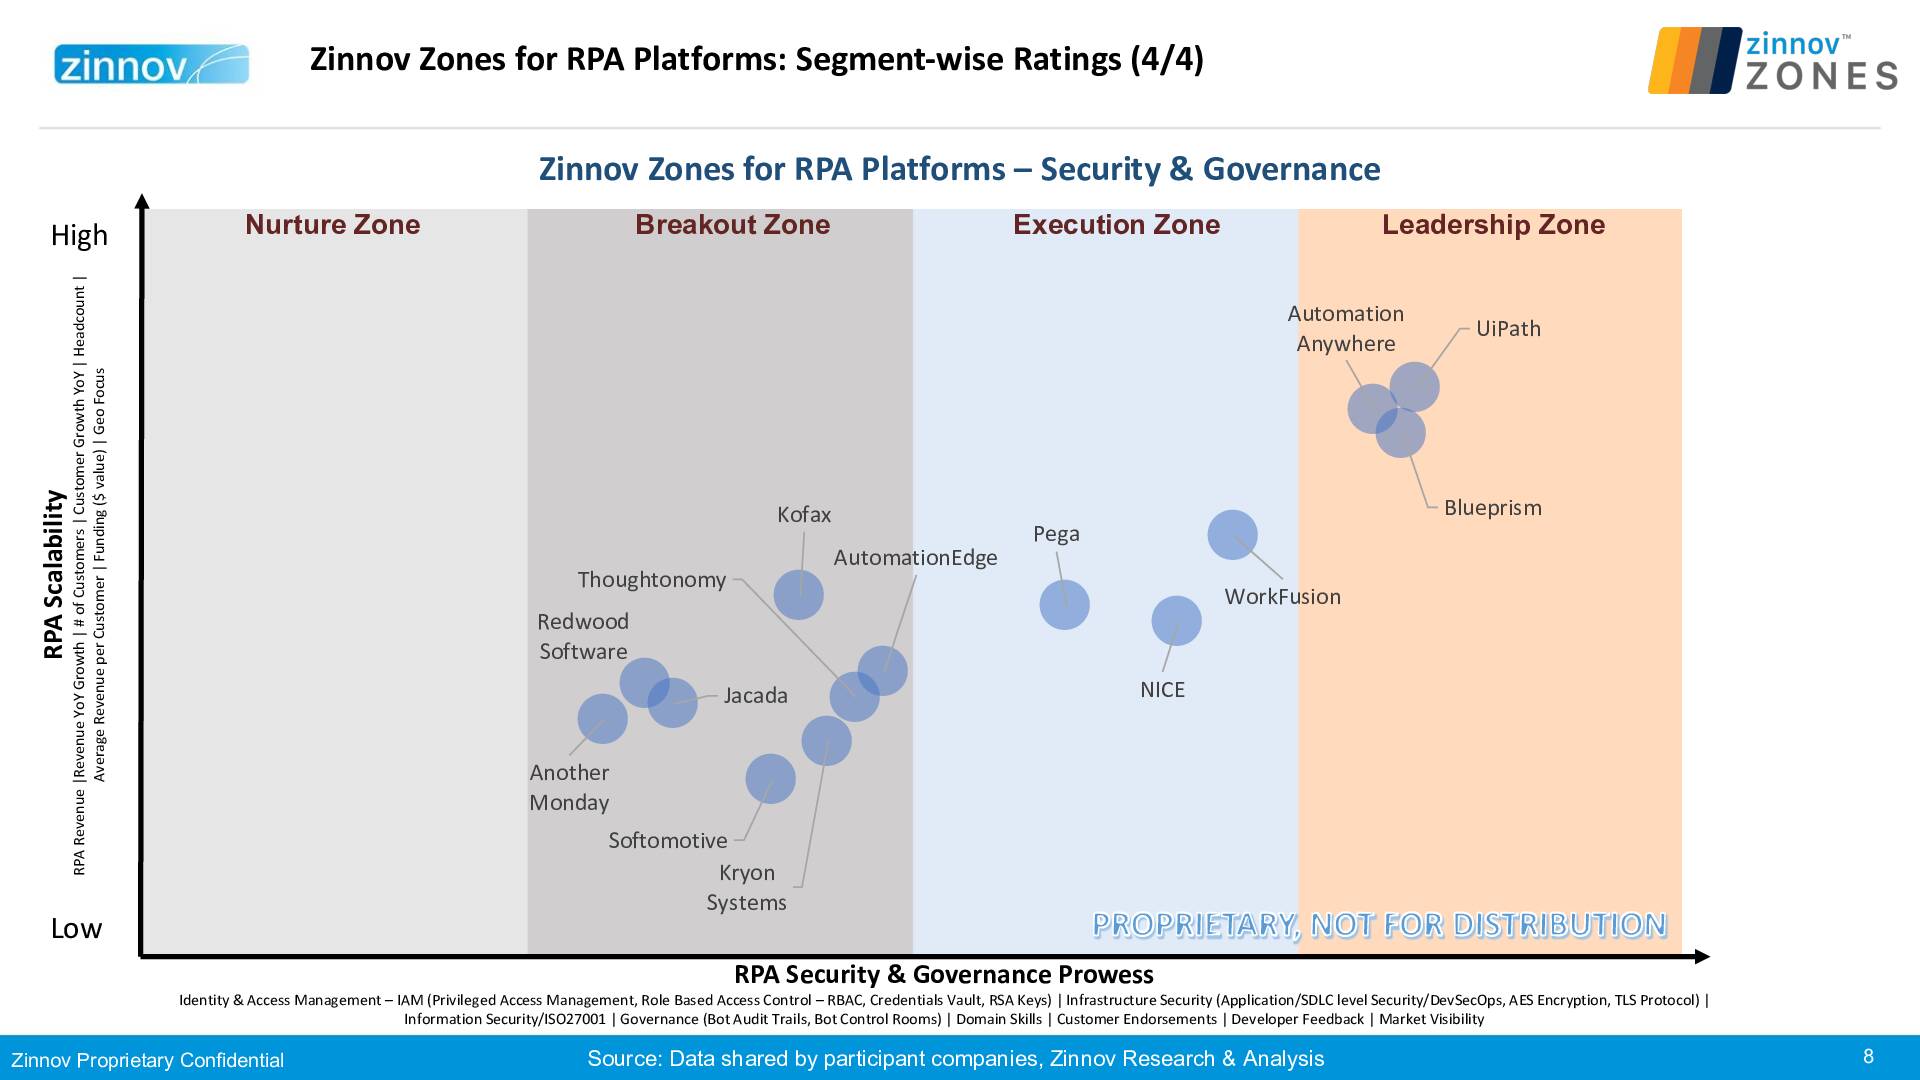 Zinnov Zones Rpa Platforms 2019 Ratings Revised V58